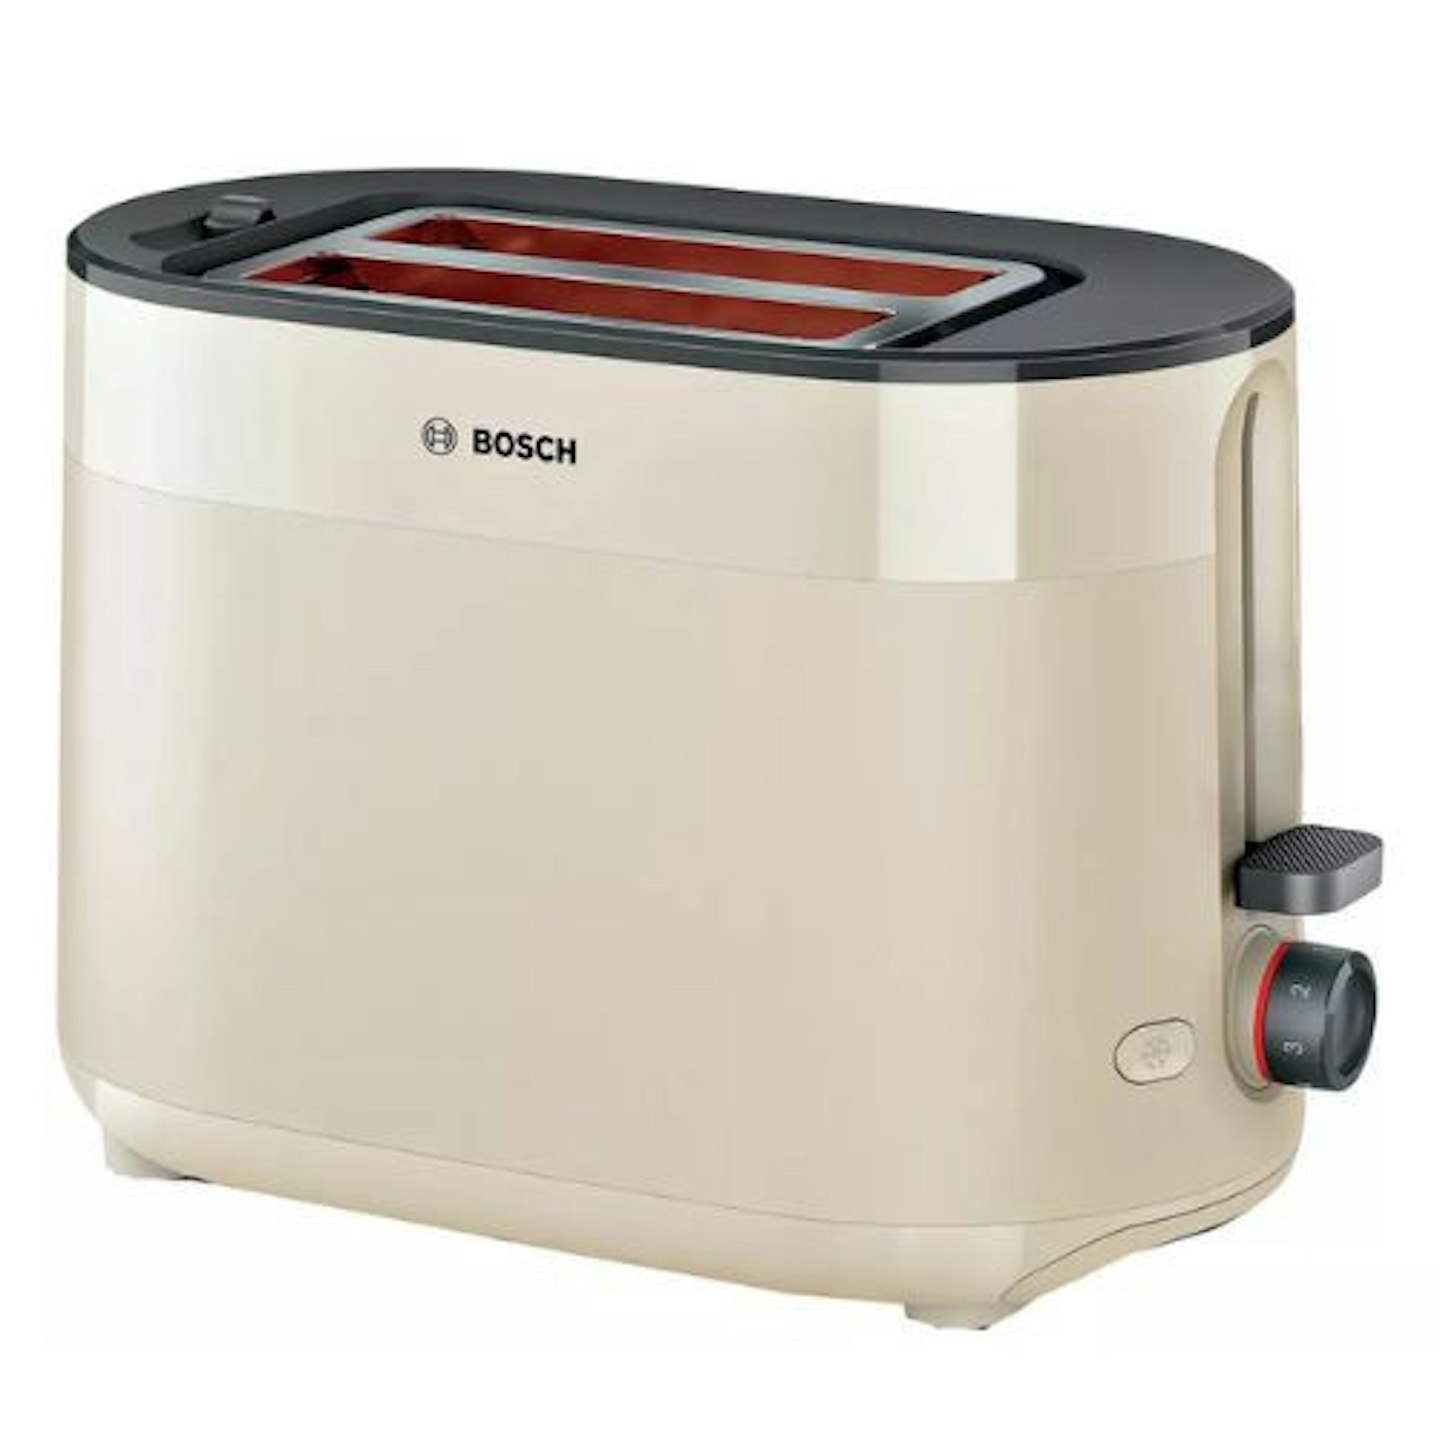 Bosch TAT2M127GB MyMoment Delight 2 Slice Toaster - Cream